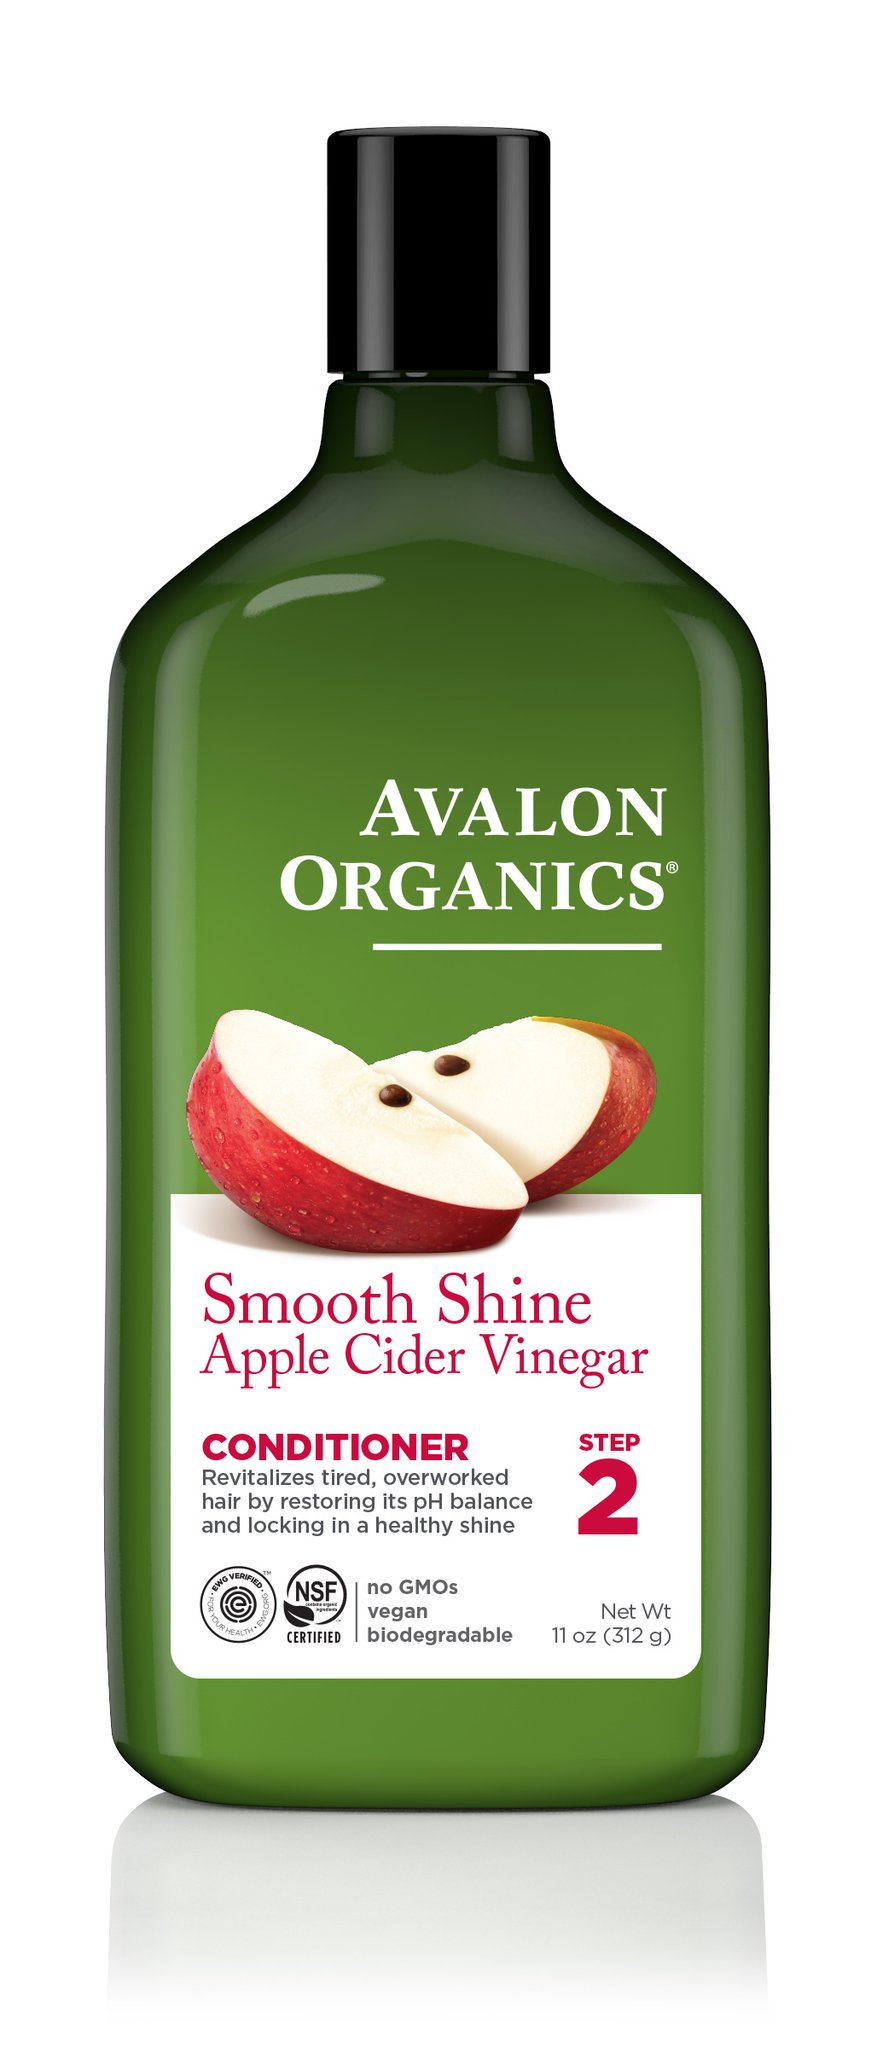 Smooth Shine Apple Cider Vinegar Conditioner 312g